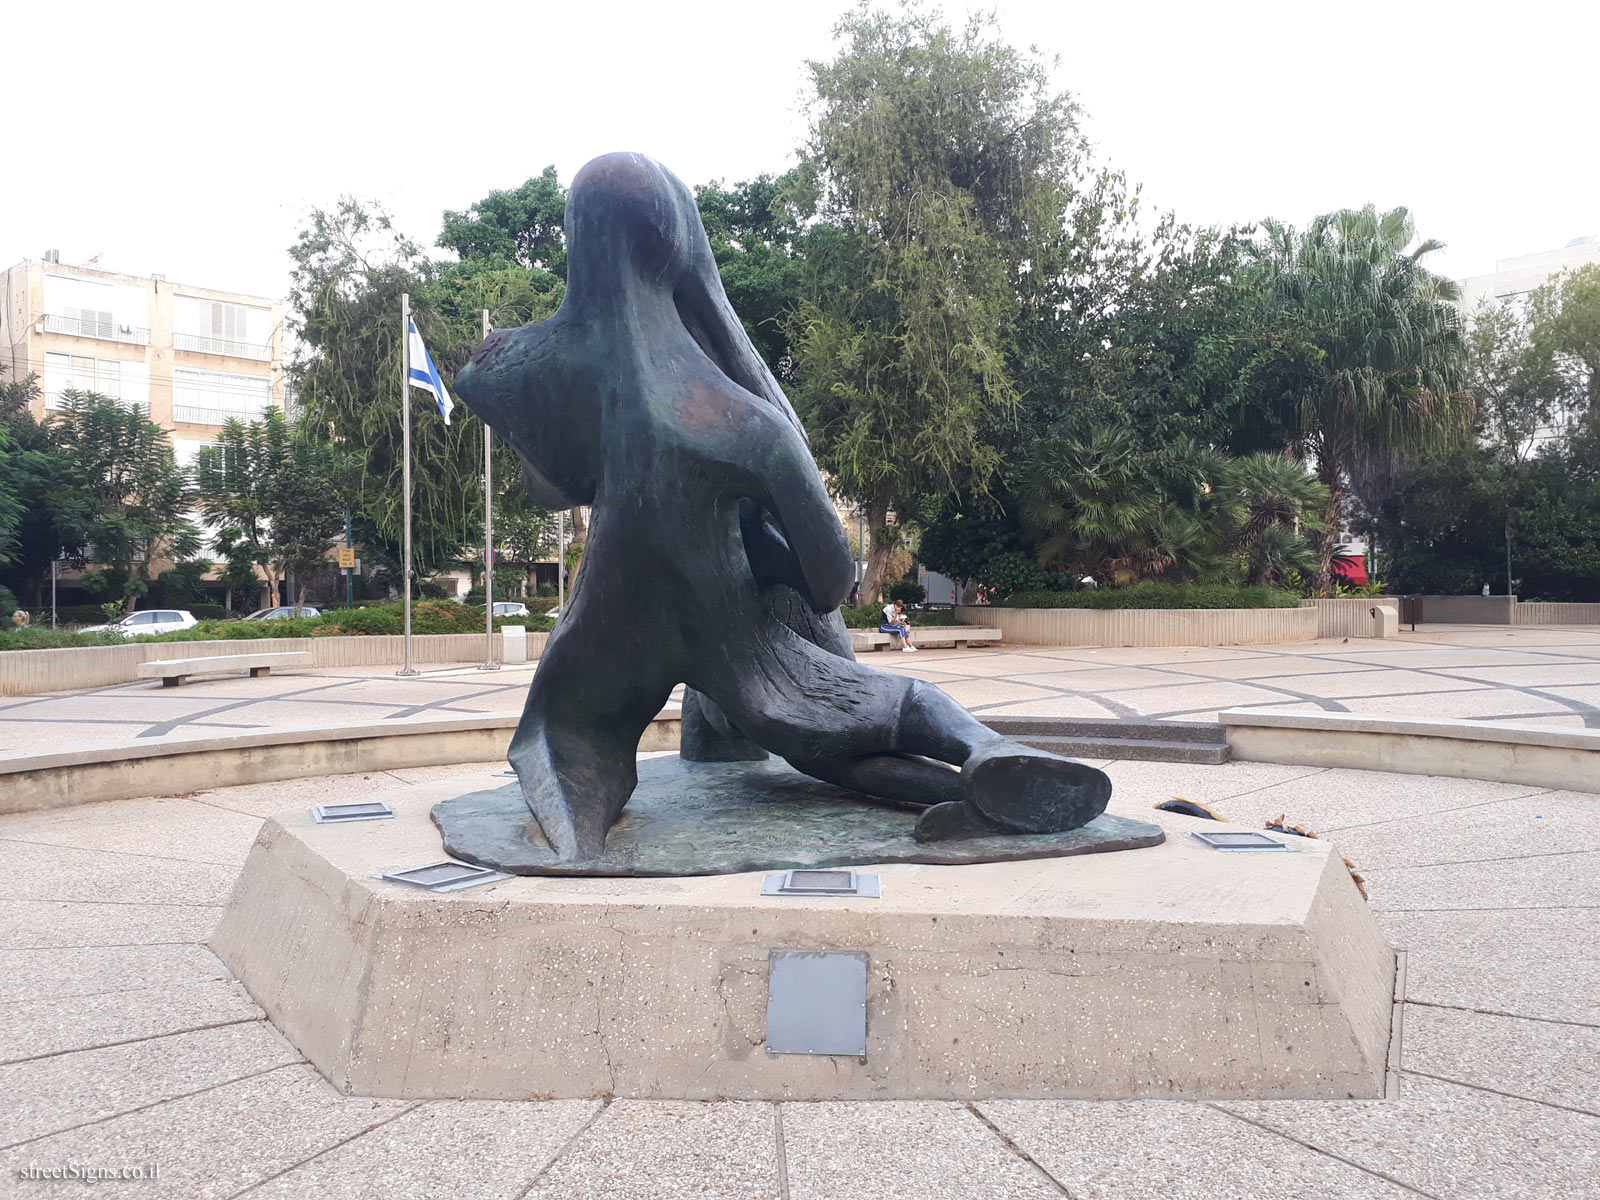 Tel Aviv - The eleventh square - Be’eri St 33, Tel Aviv-Yafo, Israel